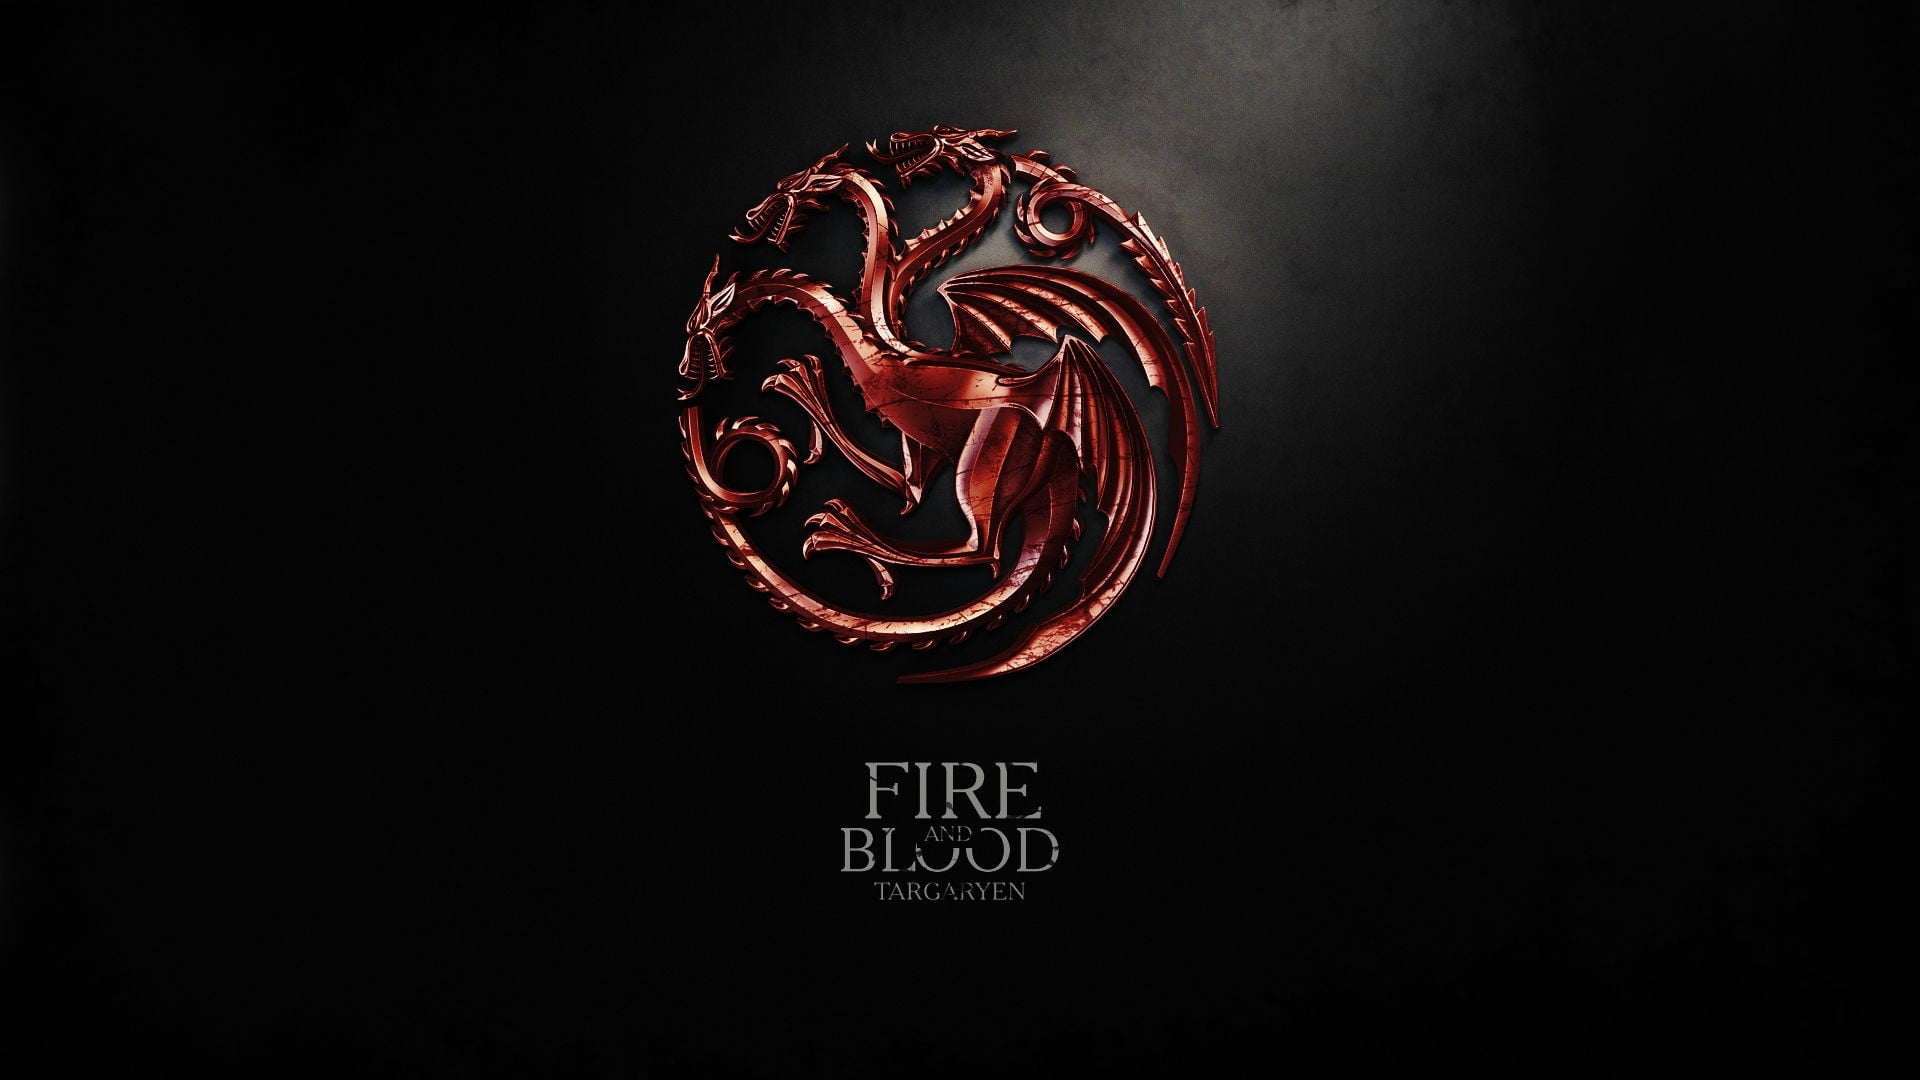 Fire Blood logo, Game of Thrones, House Targaryen, studio shot